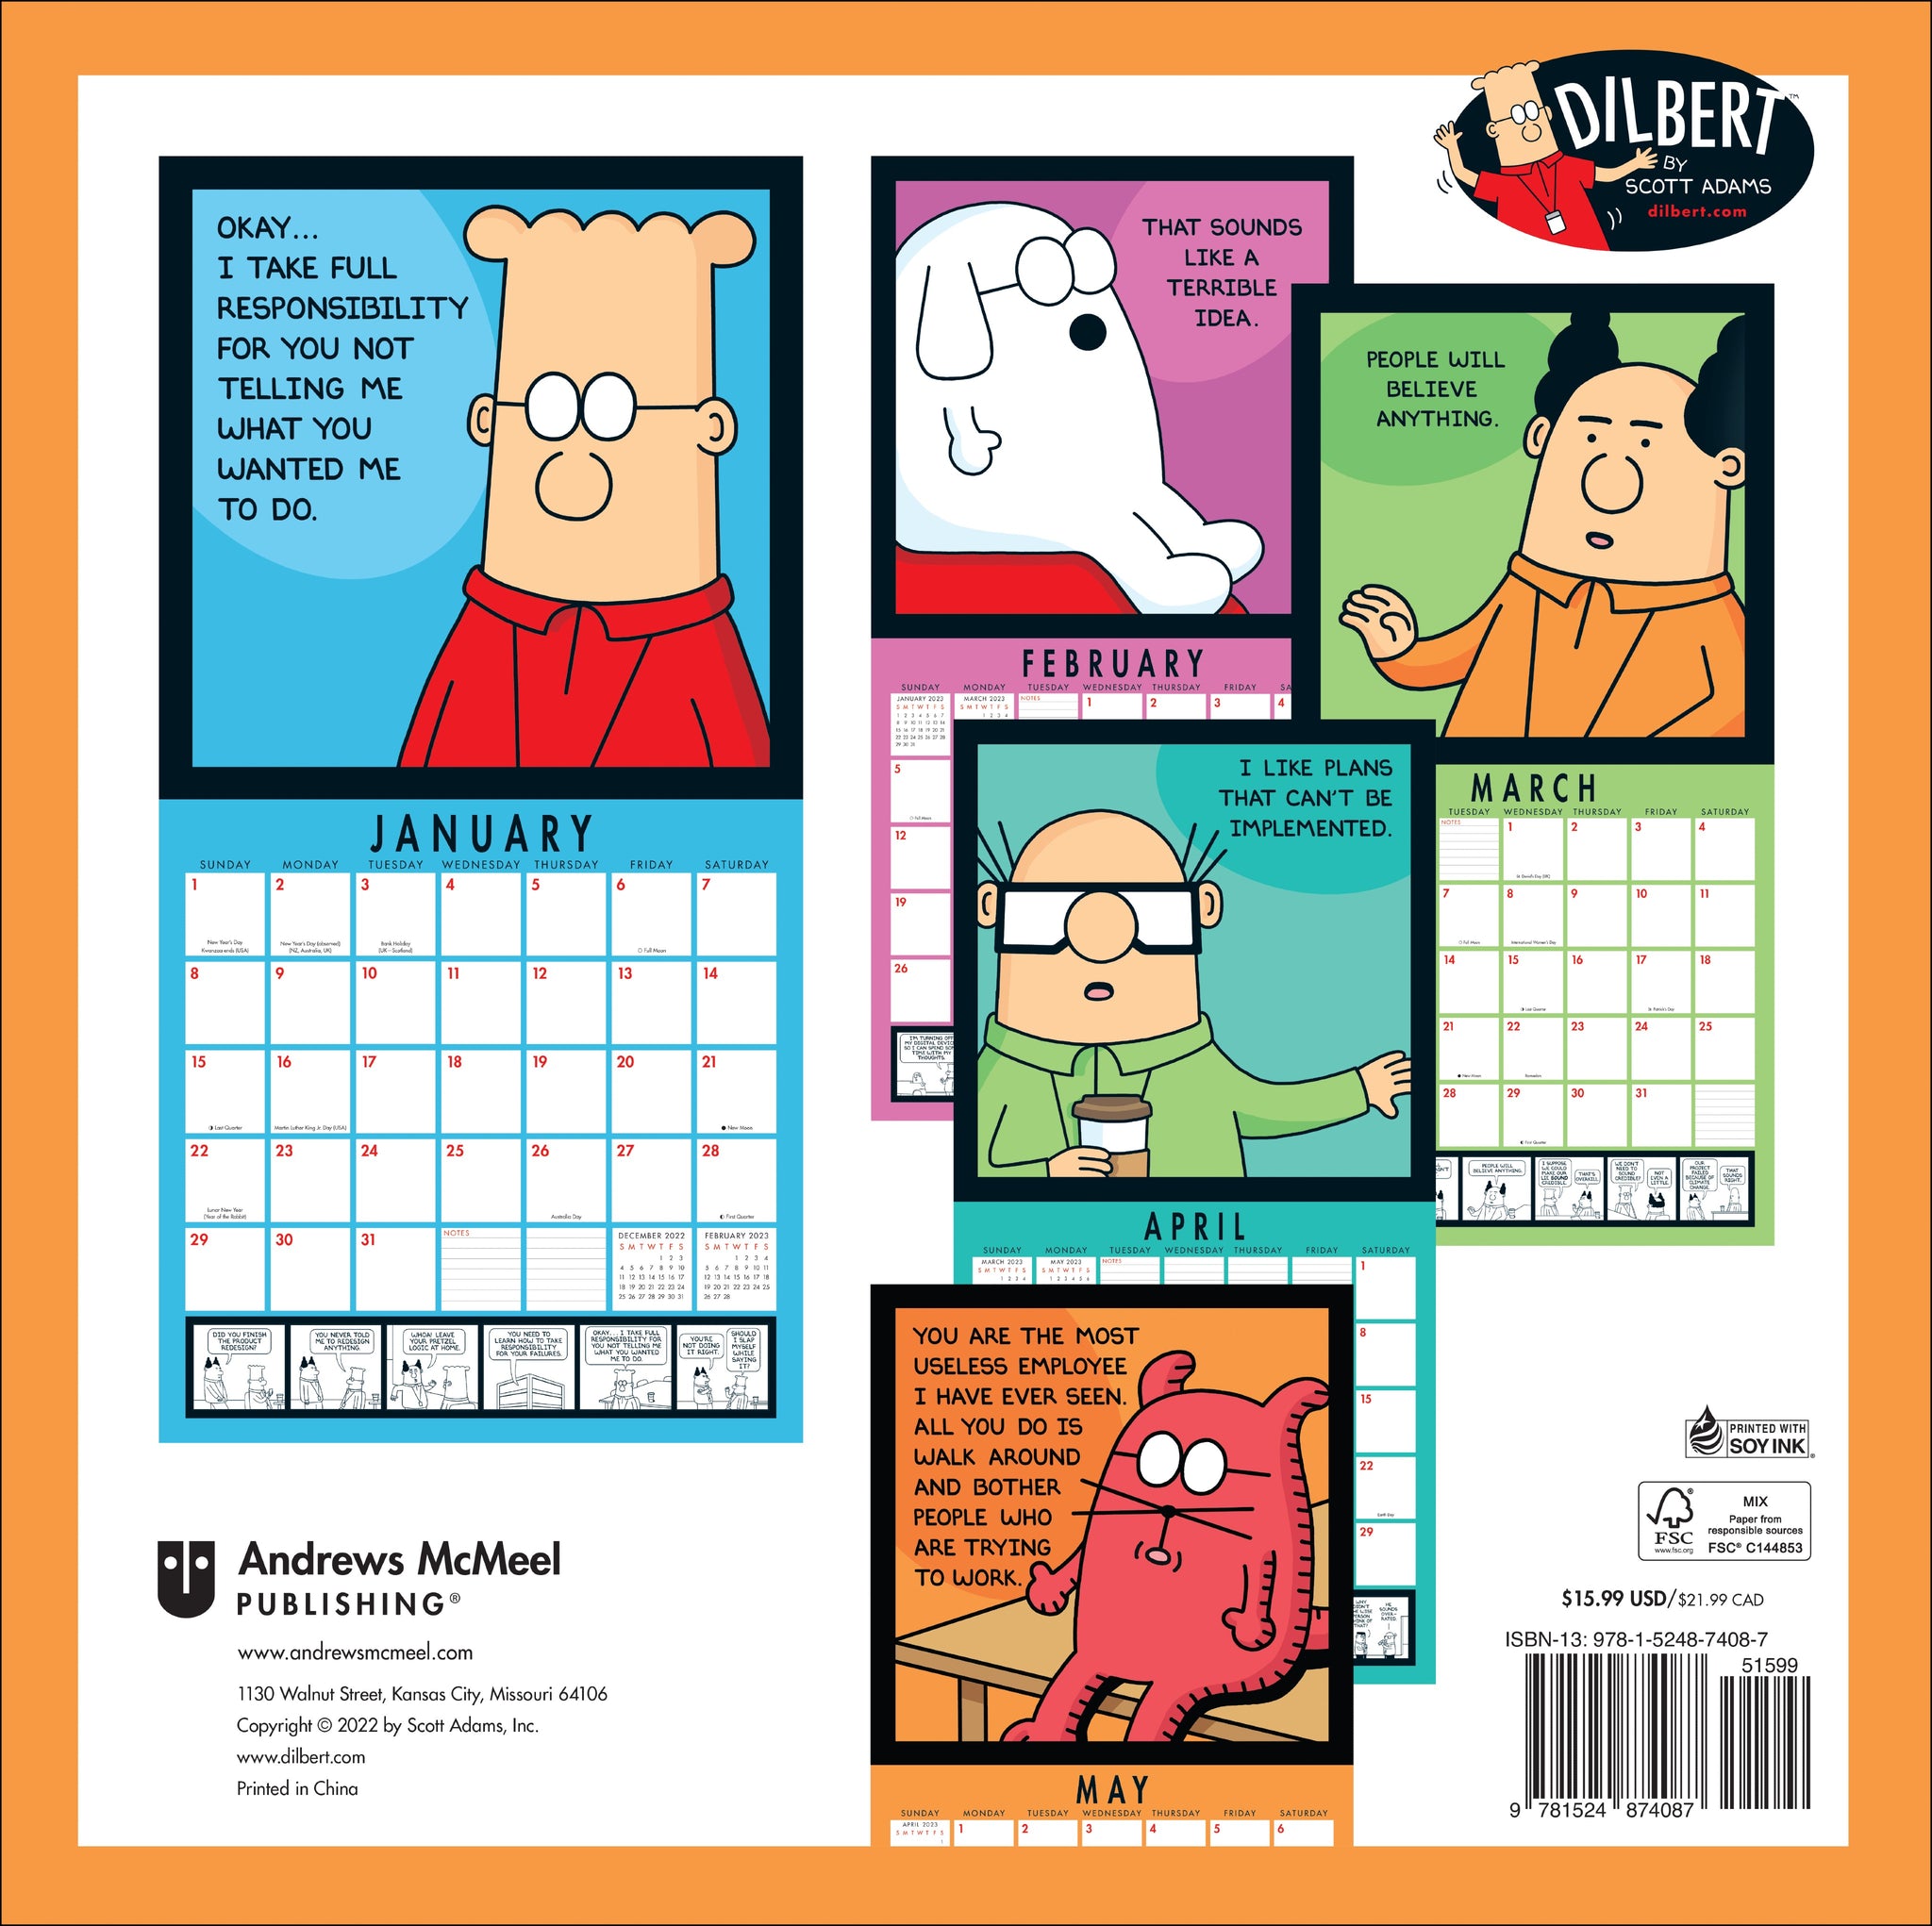 shop-dilbert-calendars-online-in-store